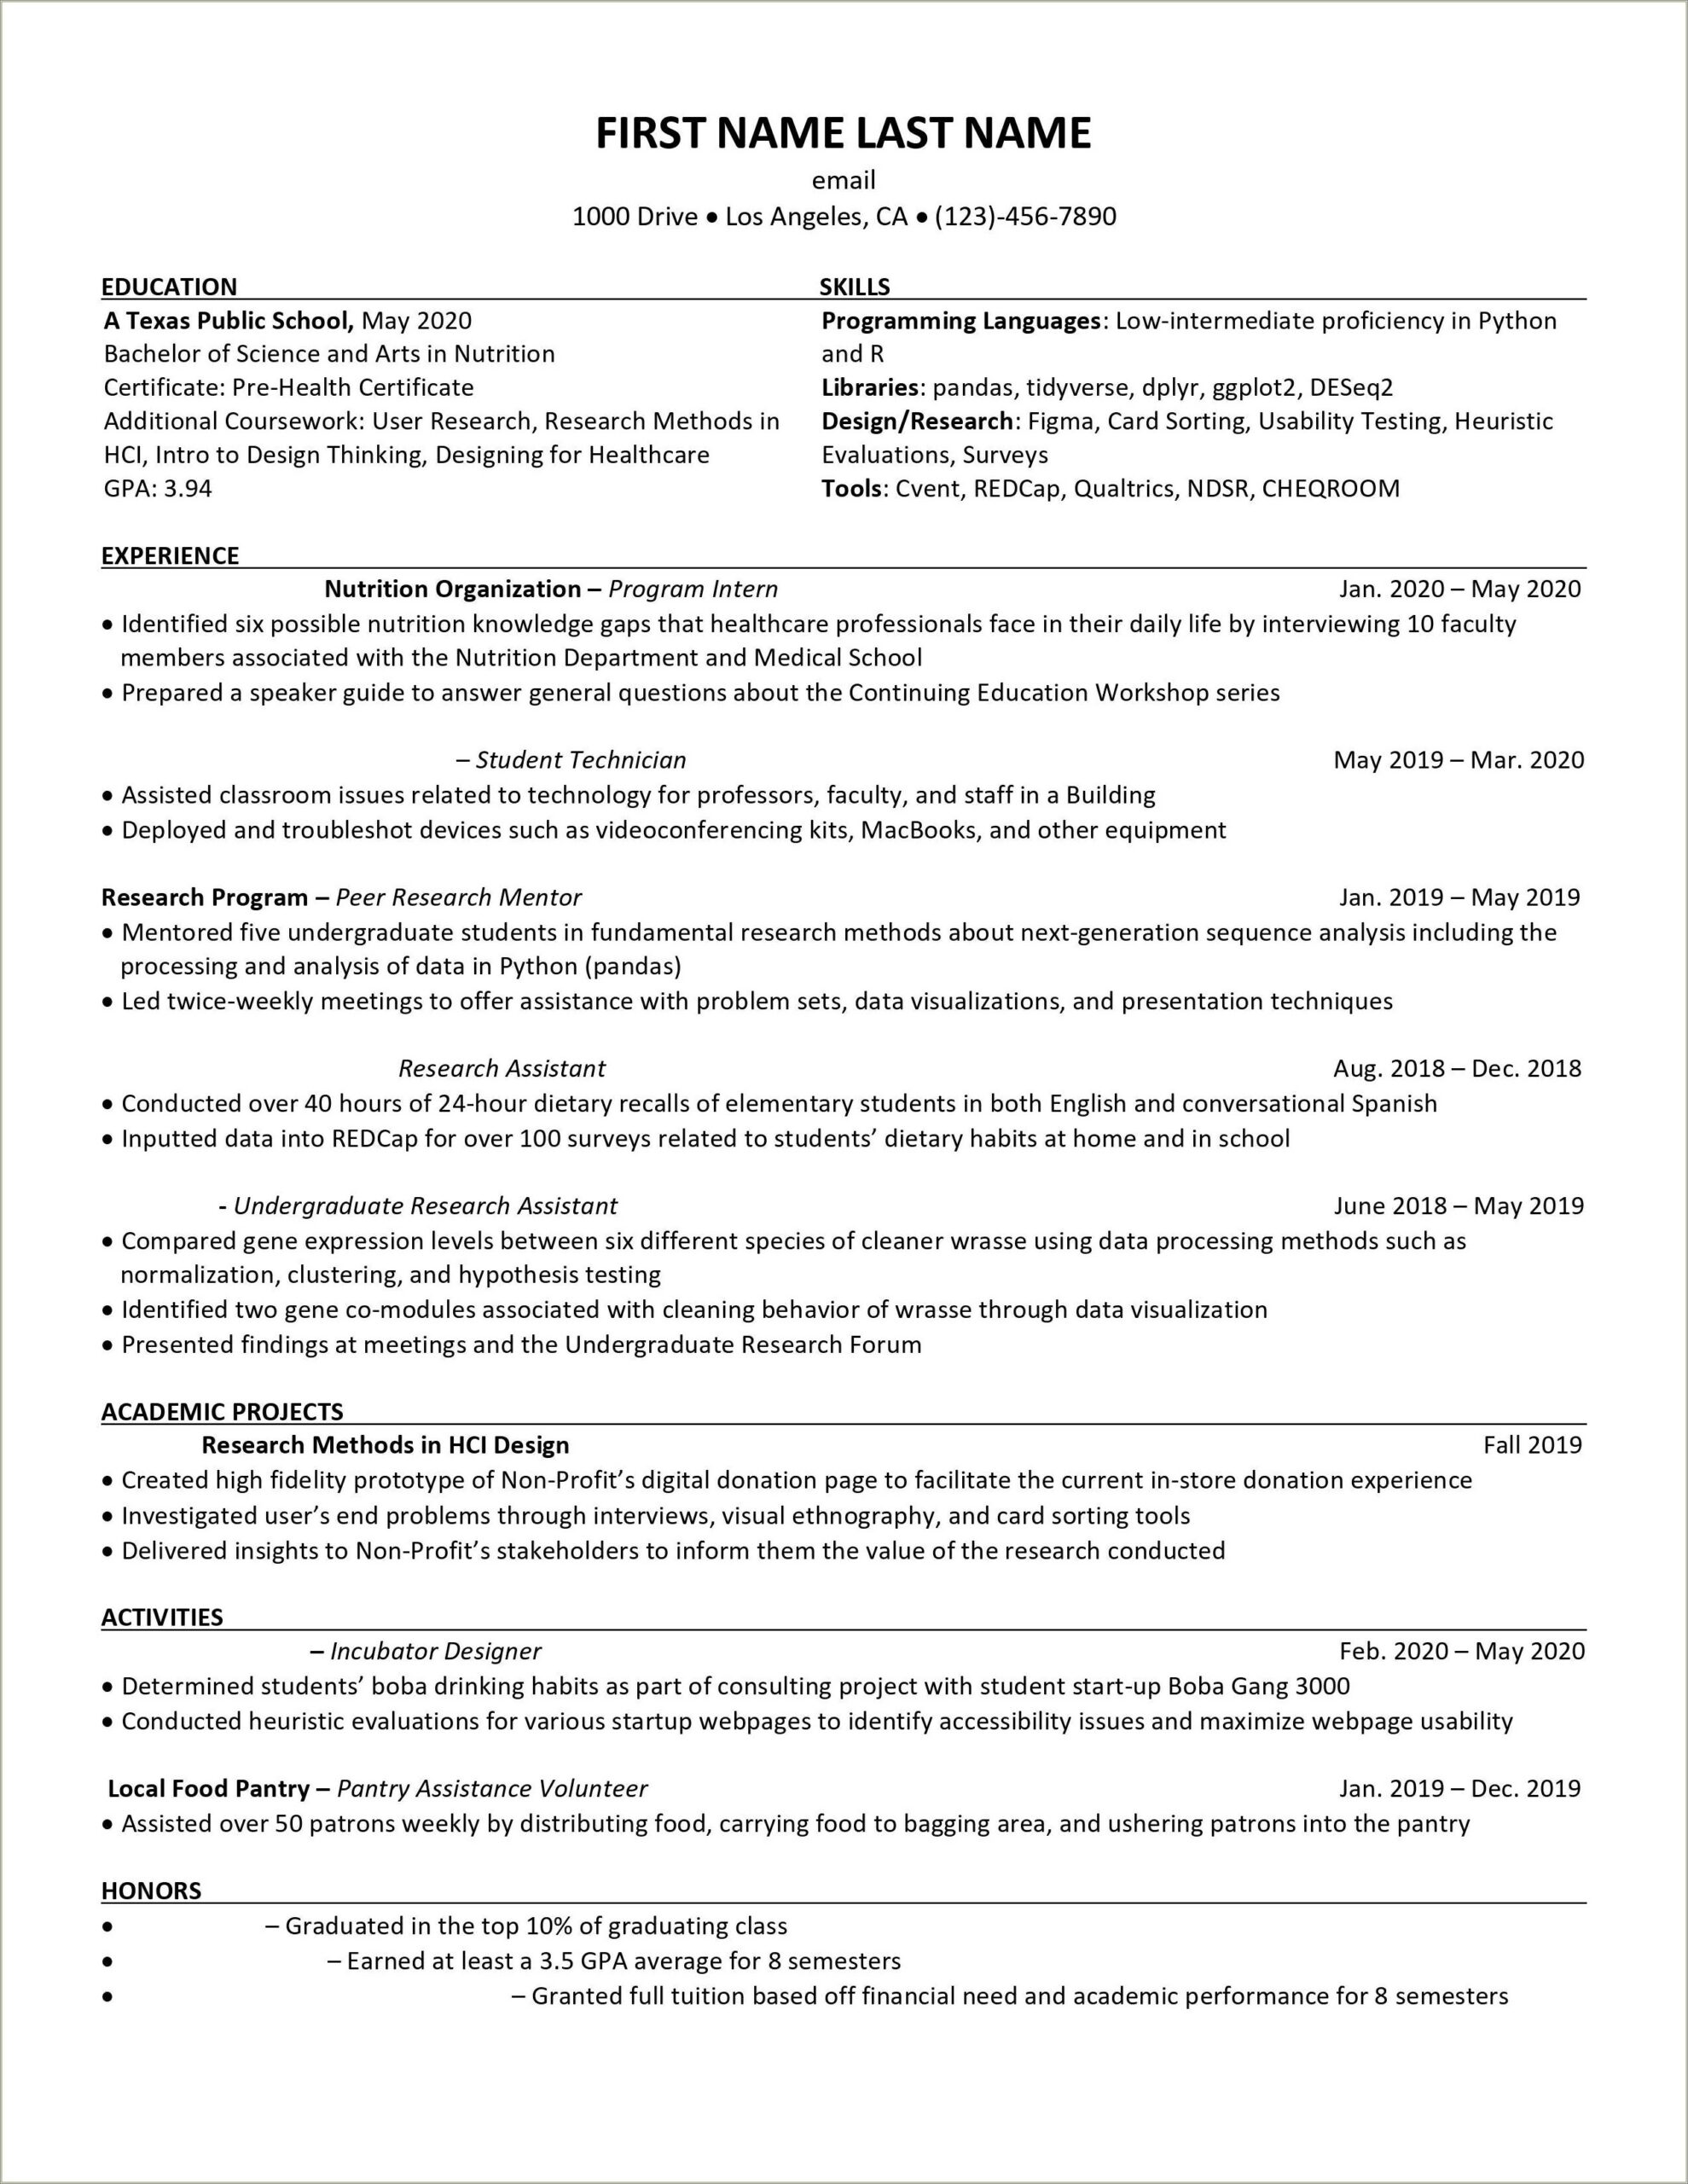 Resume For School Of Public Health